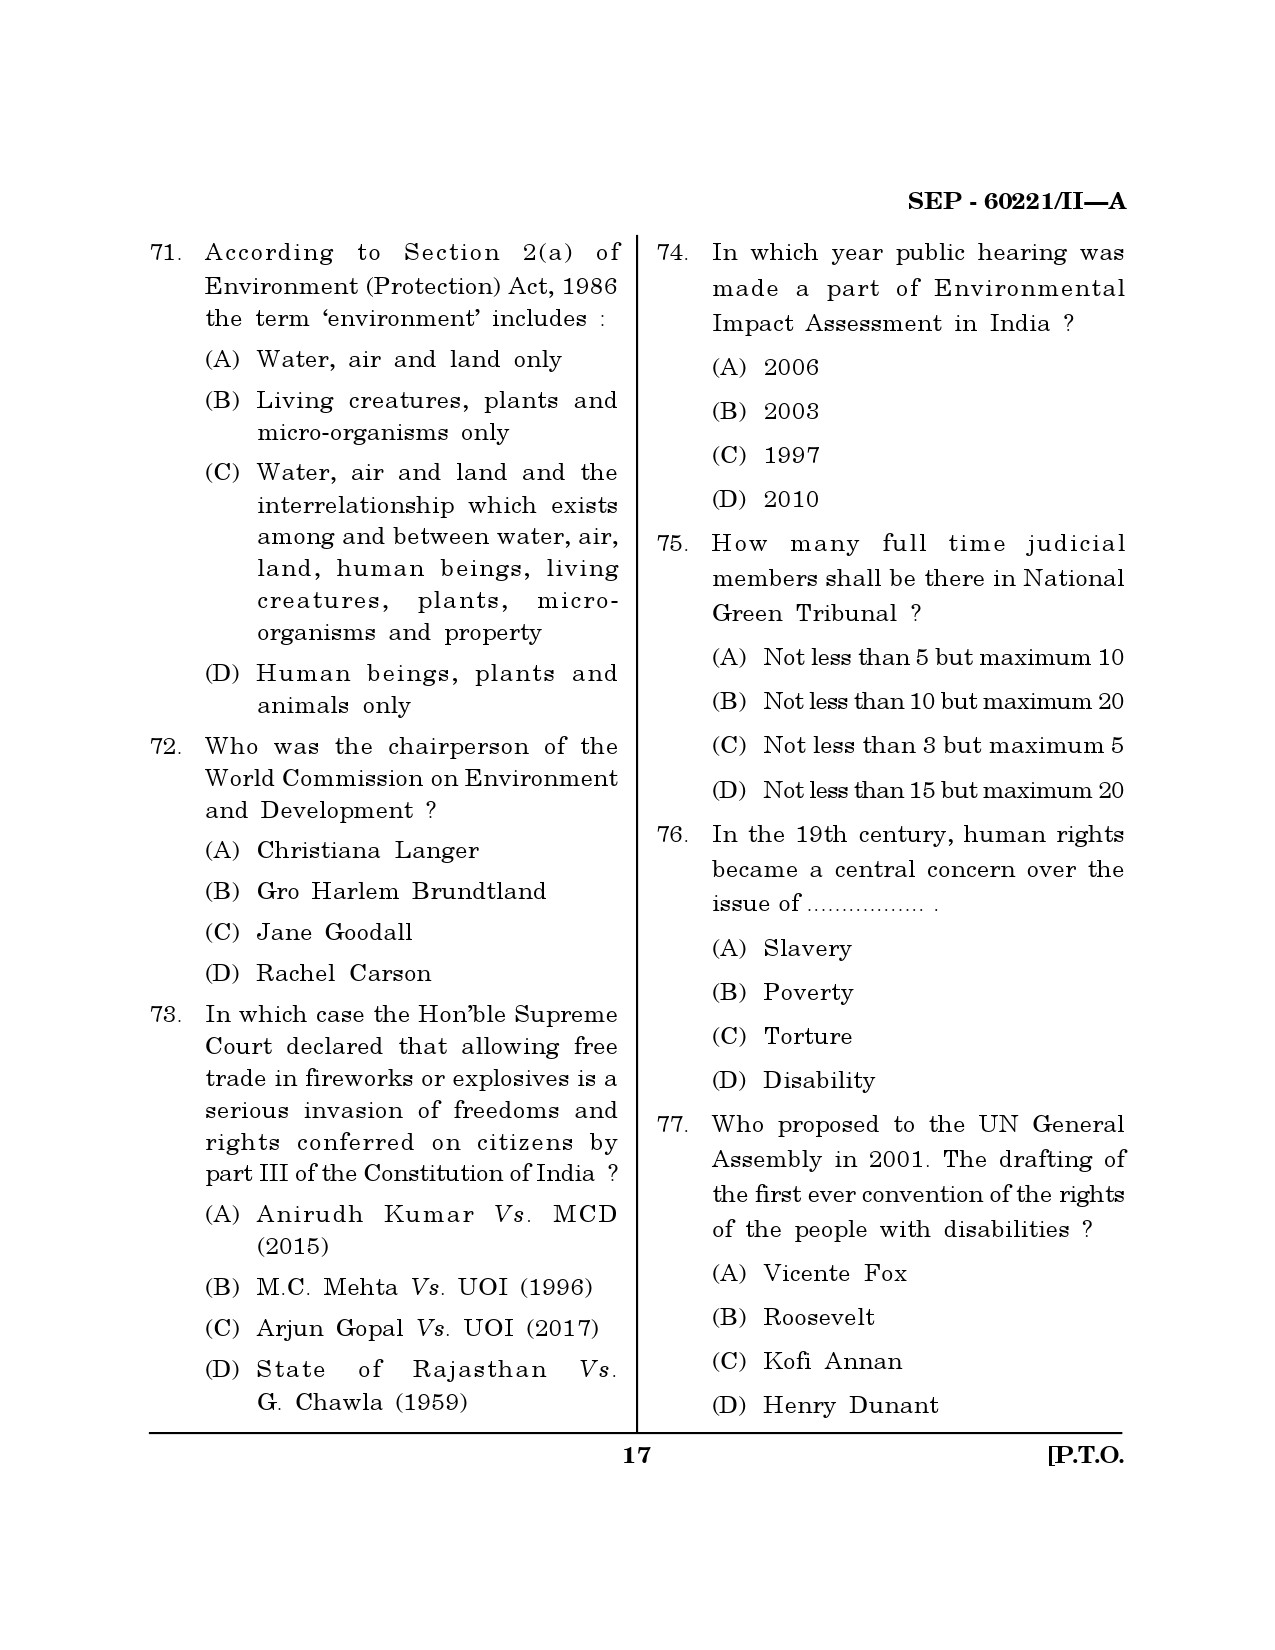 Maharashtra SET Law Exam Question Paper September 2021 16